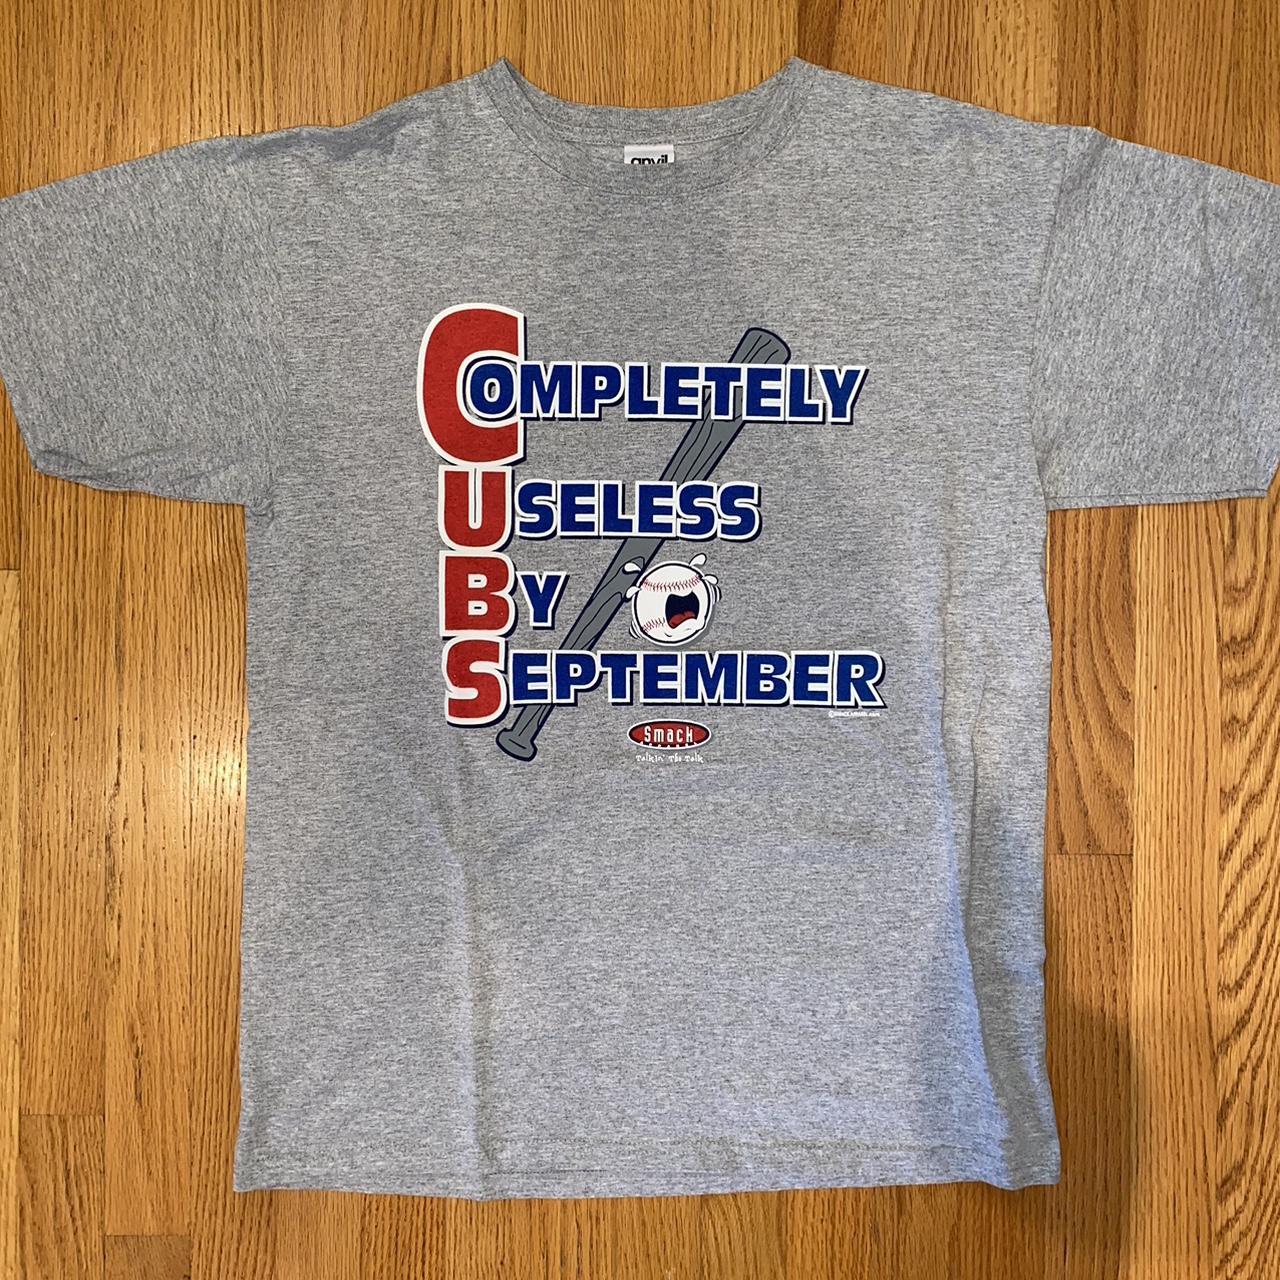 Vintage Retro Chicago Cubs Baseball Best T-Shirt